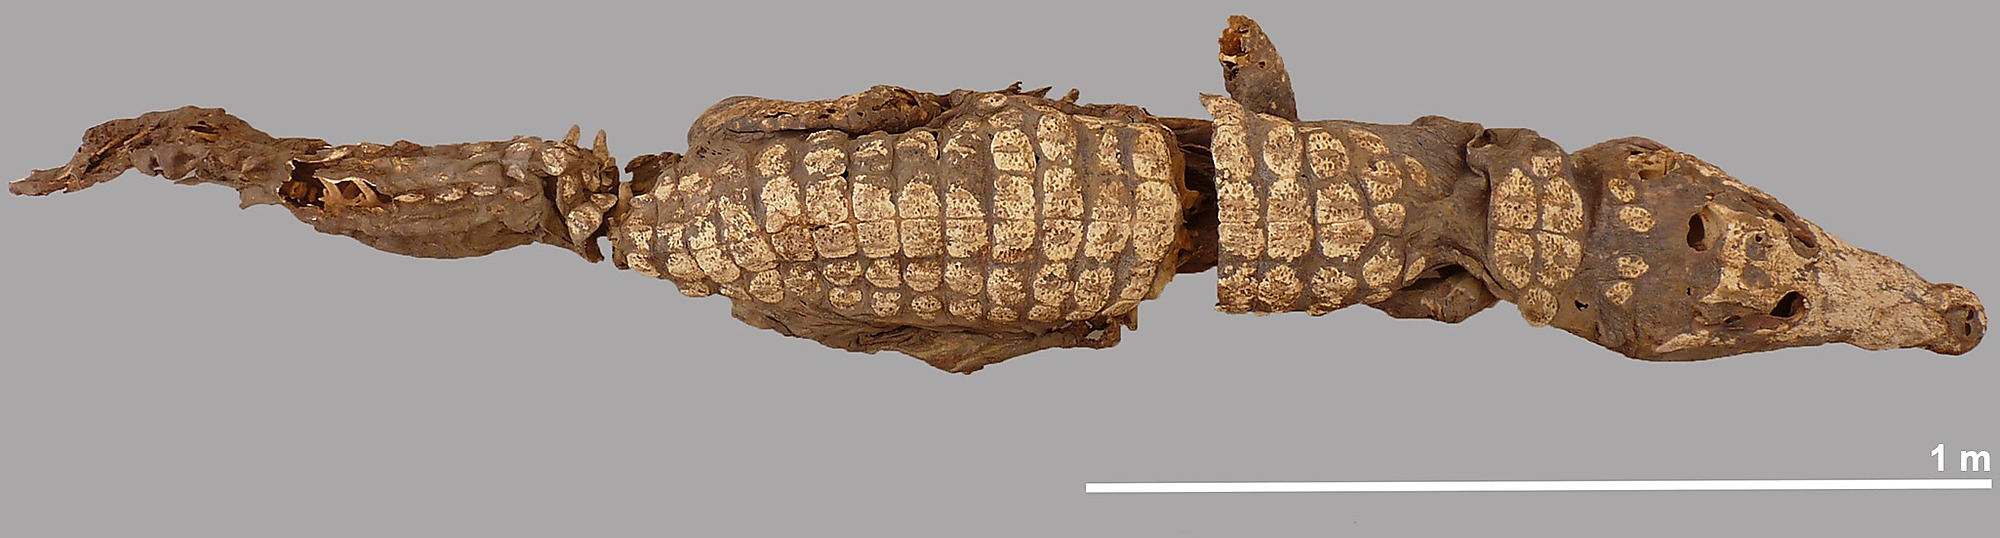 Vue dorsale du crocodile complet #5.Patri Mora Riudavets, membre de l'équipe Qubbat al-Hawā